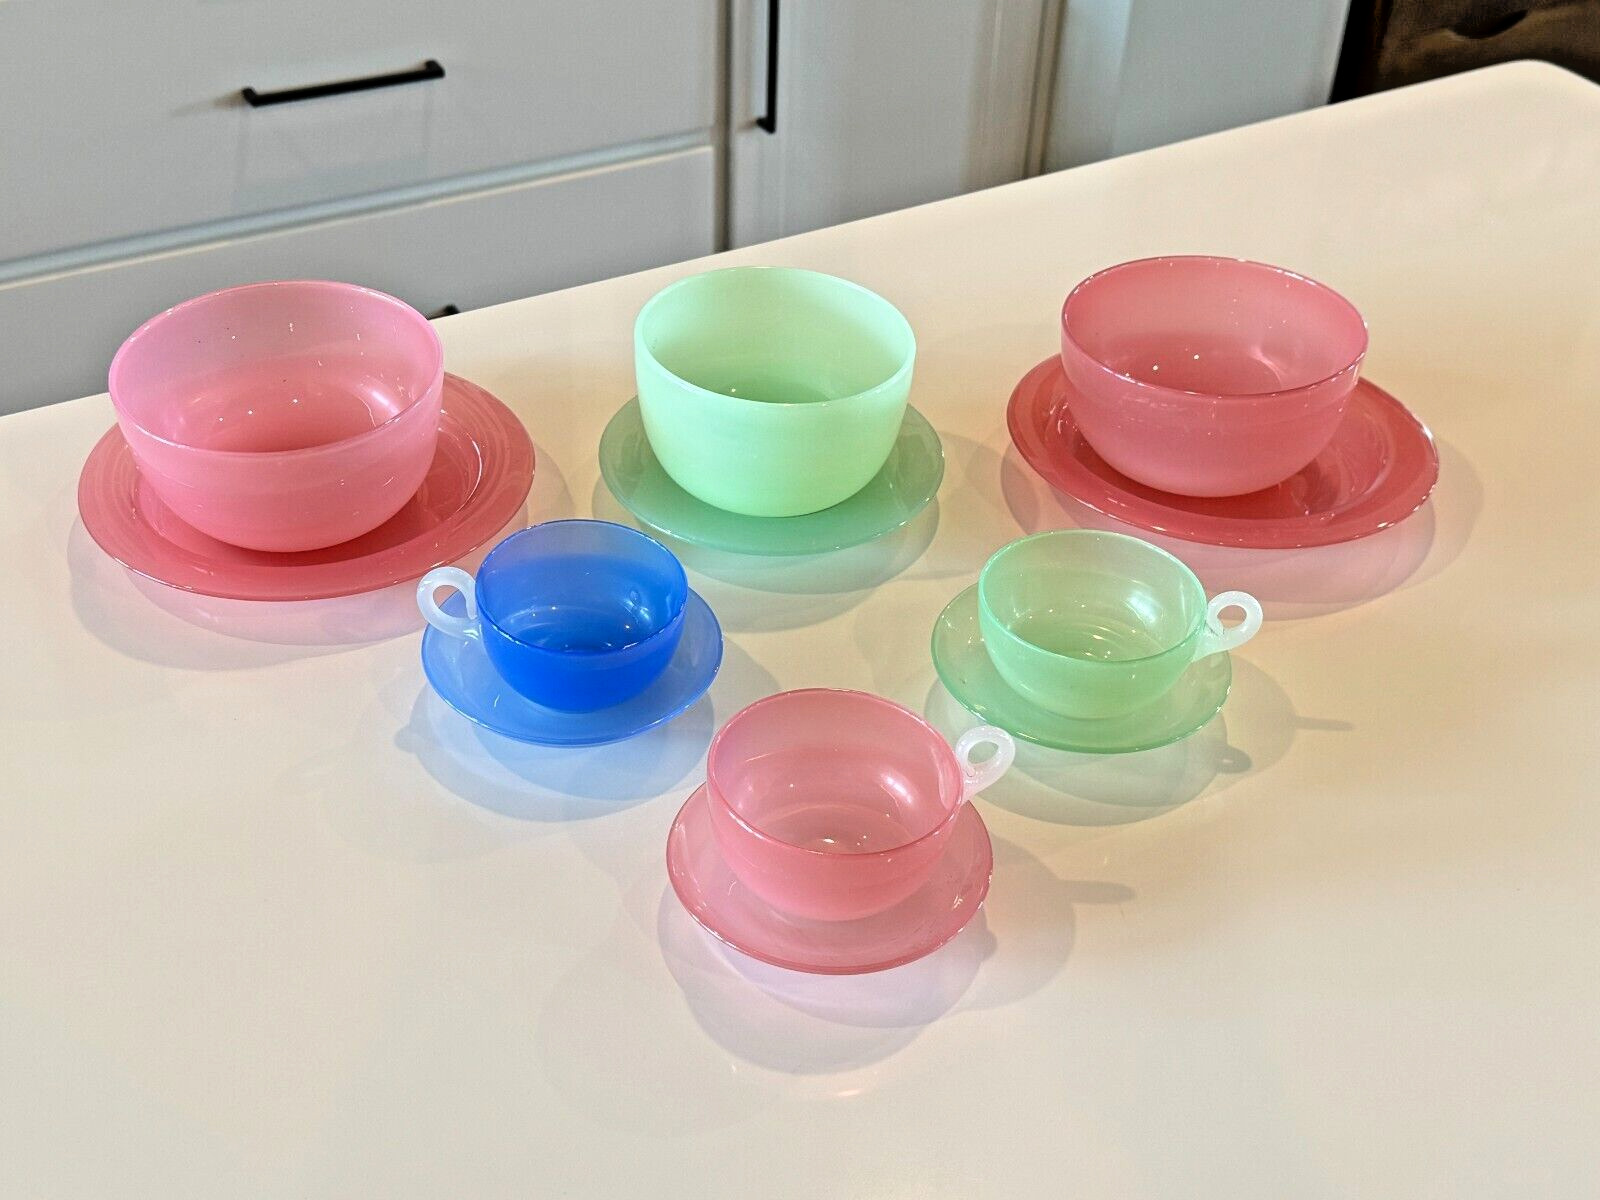 Antique Steuben / Carder Jade Alabaster Art Glass Collection Cups, Bowls, Plates